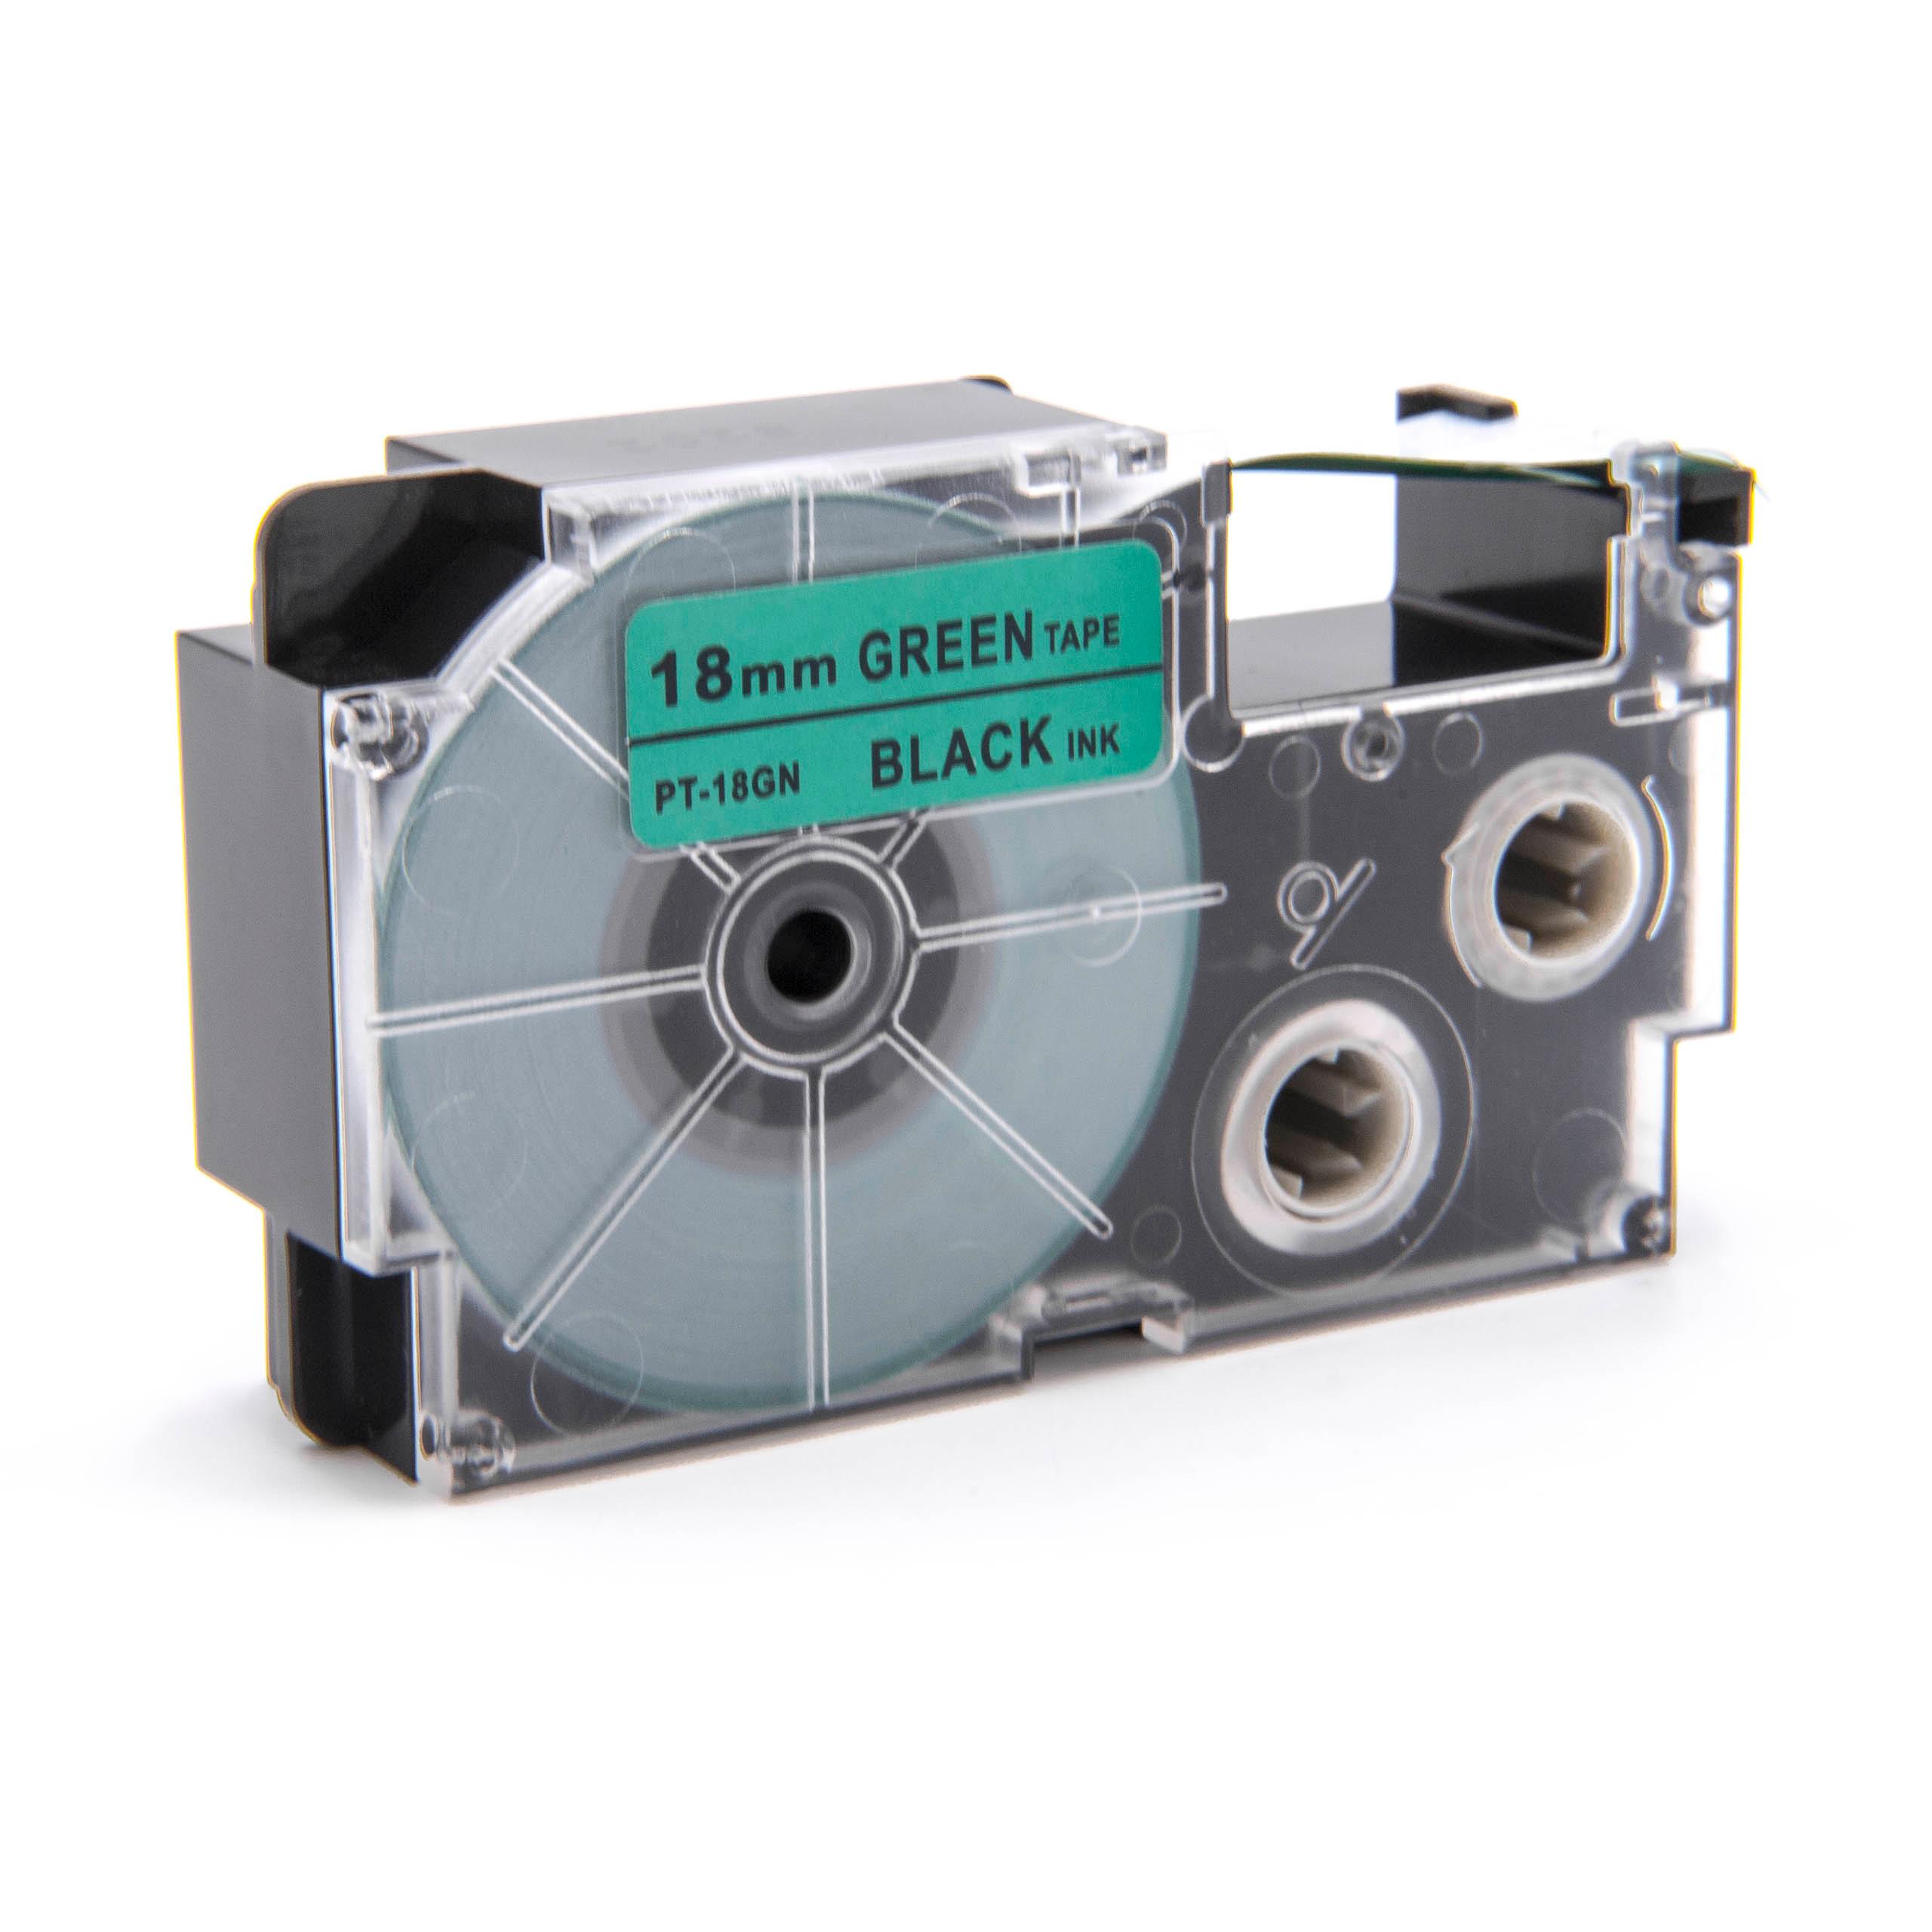 Cassetta nastro sostituisce Casio XR-18GN1, XR-18GN per etichettatrice Casio 18mm nero su verde, pet+ RESIN